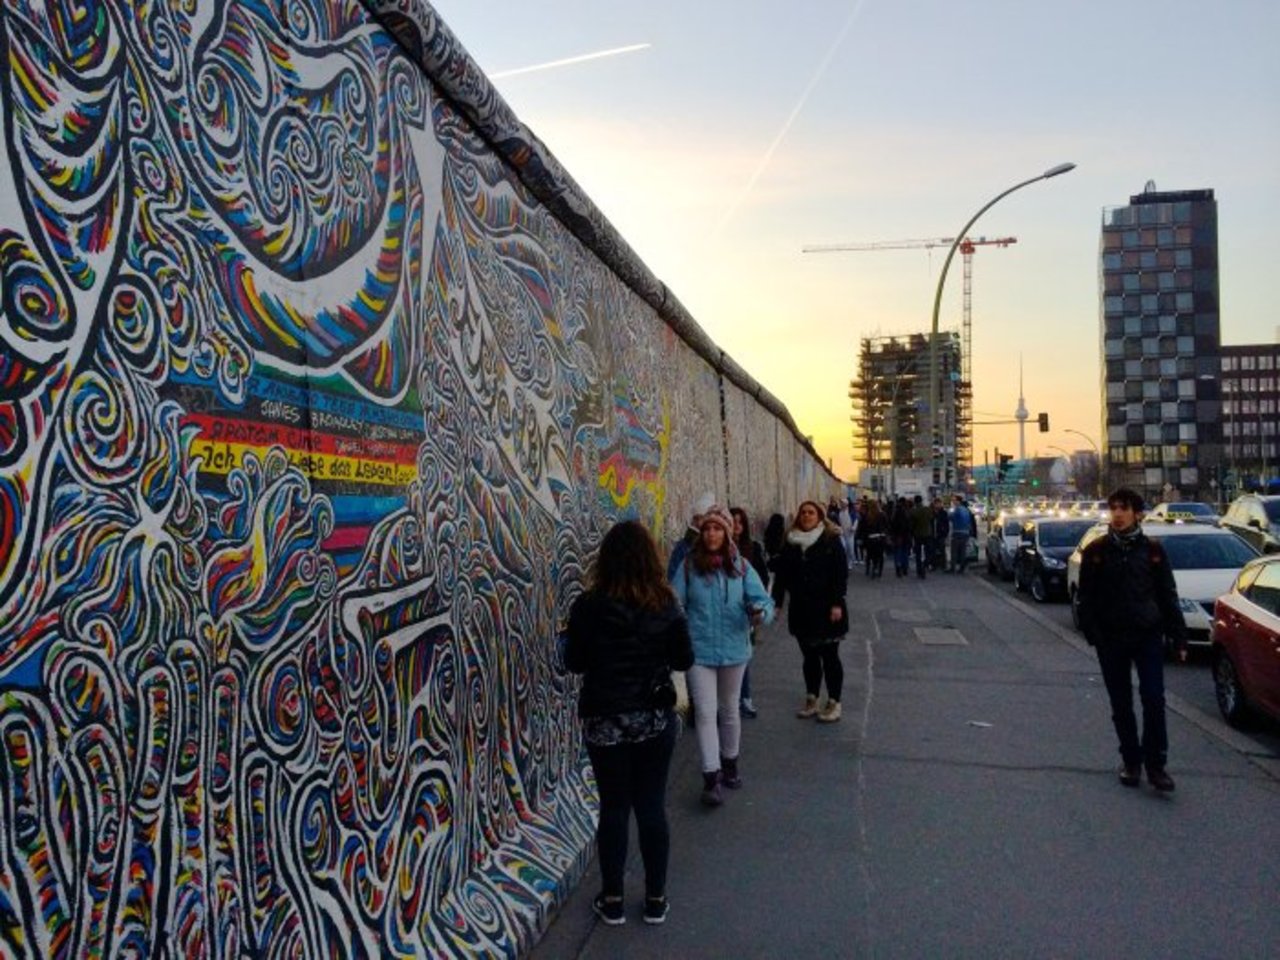 Berlin Wall, East Side Gallery & the passage of time: http://buff.ly/2dVj6bm #travel #Berlin #Streetart https://t.co/bJfkKkQWcs